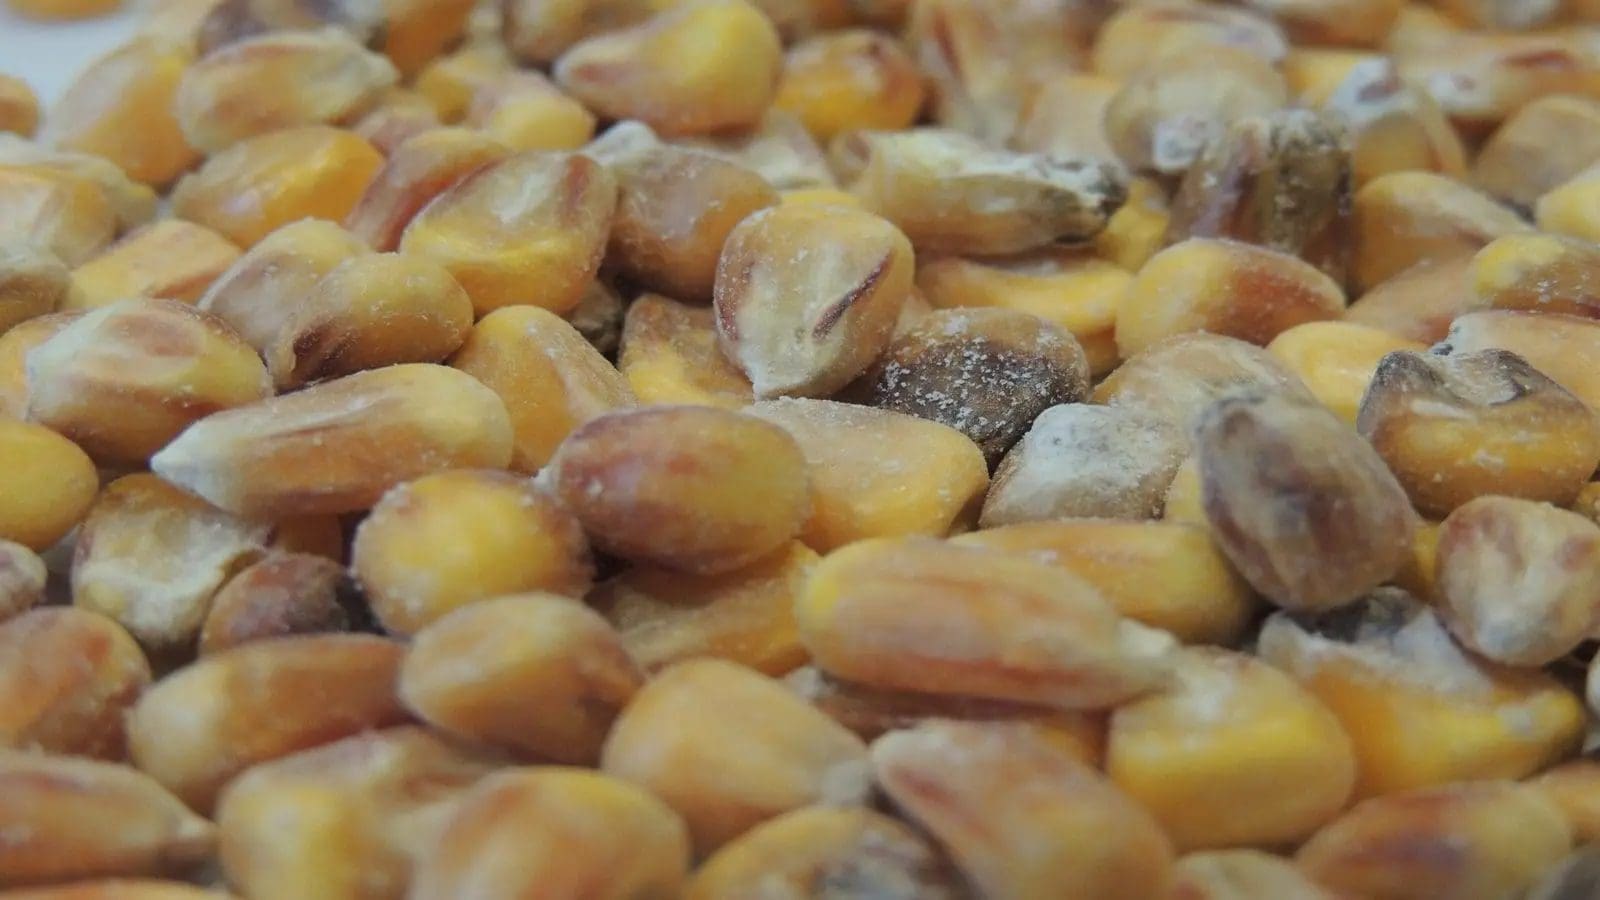 High foreign maize demand fuels aflatoxin crisis in Uganda